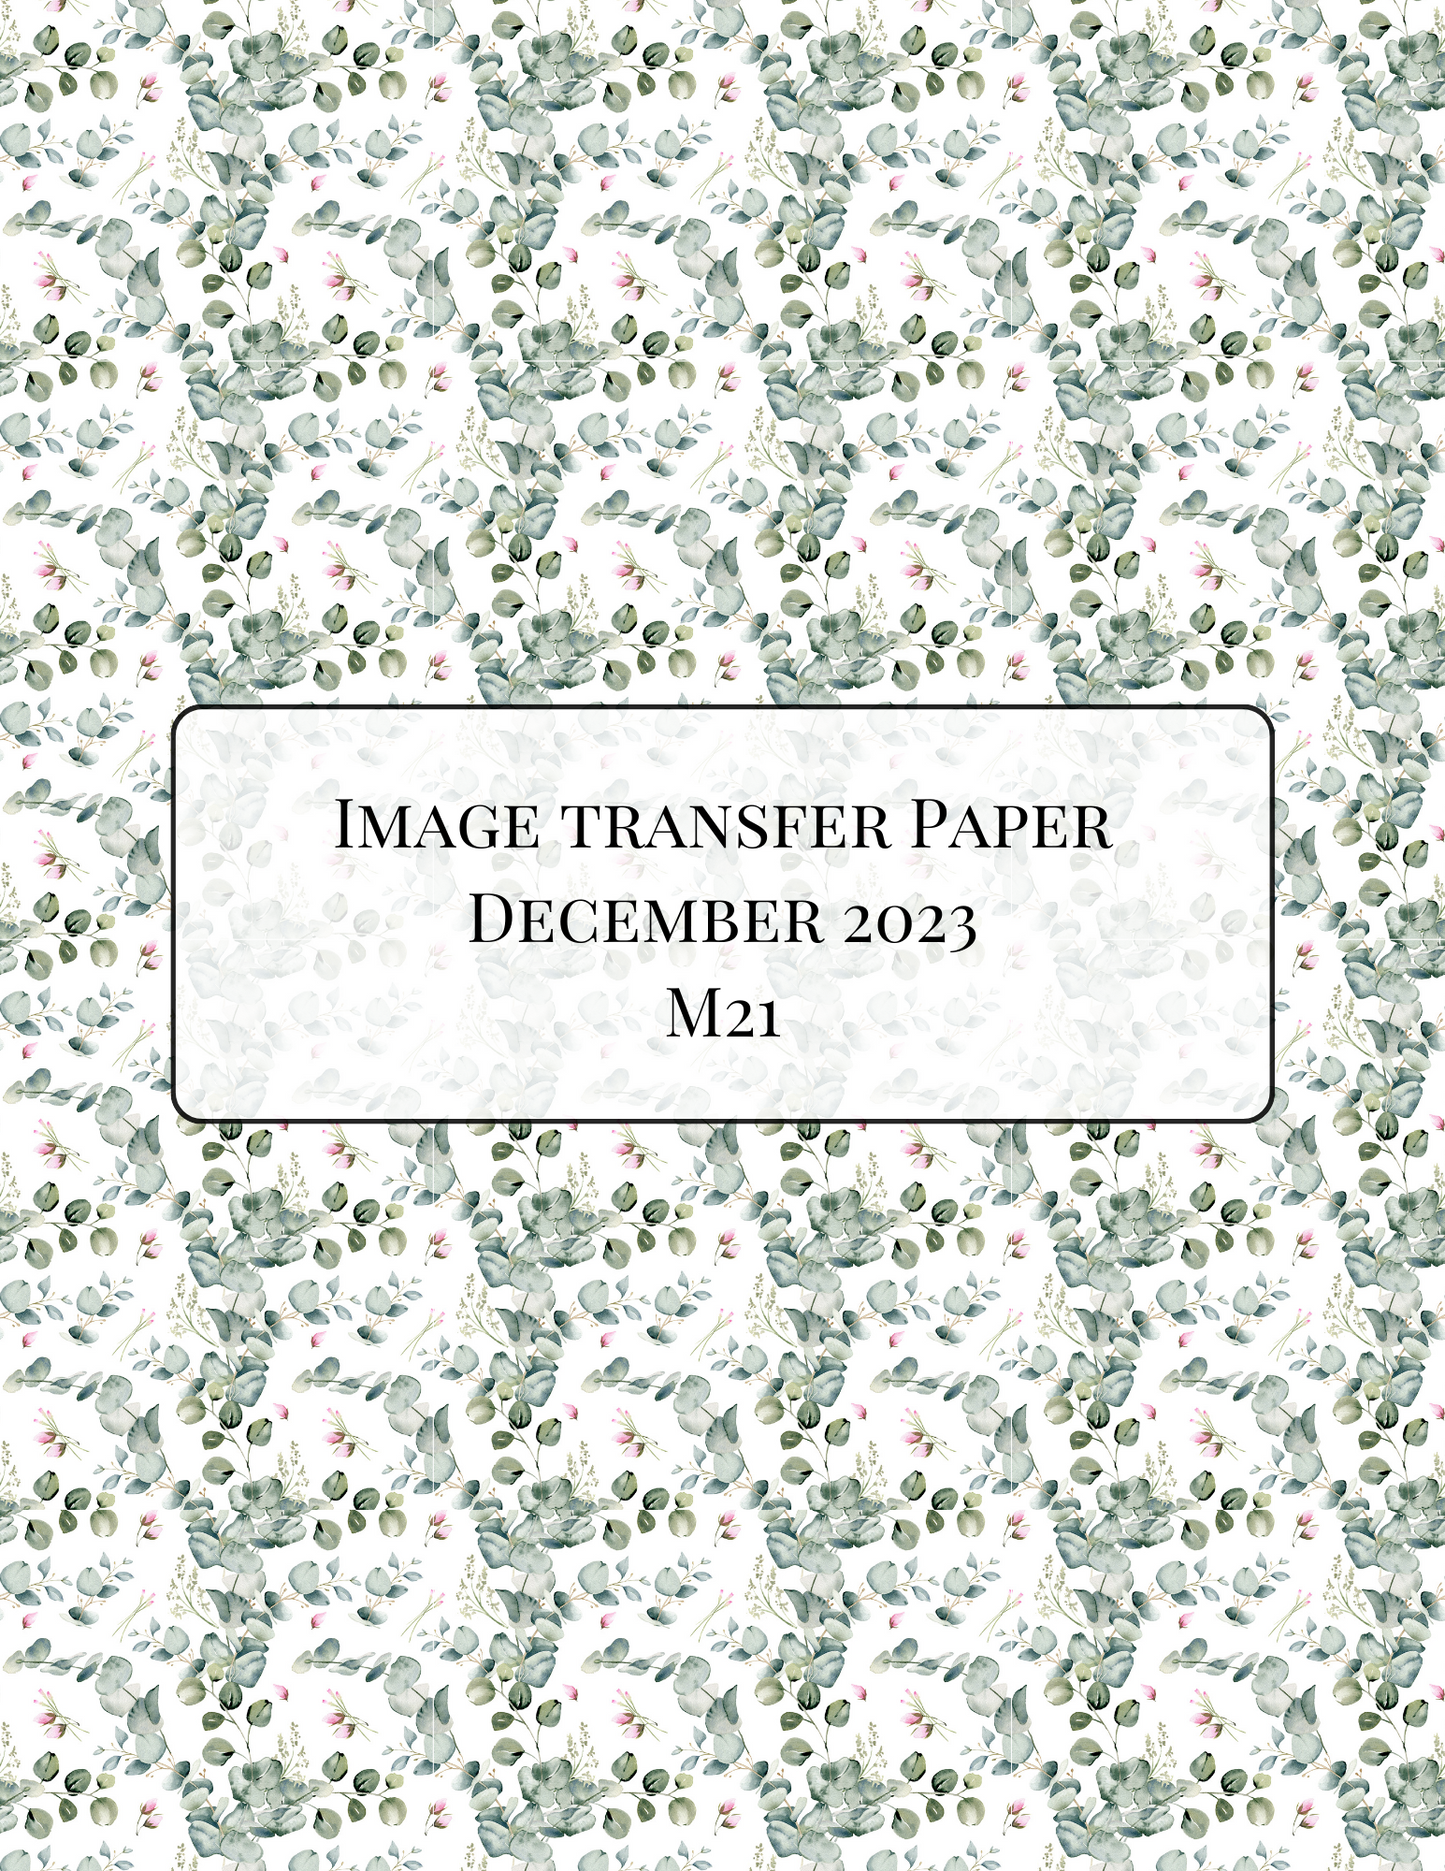 M21 Transfer Paper - December 2023 Launch